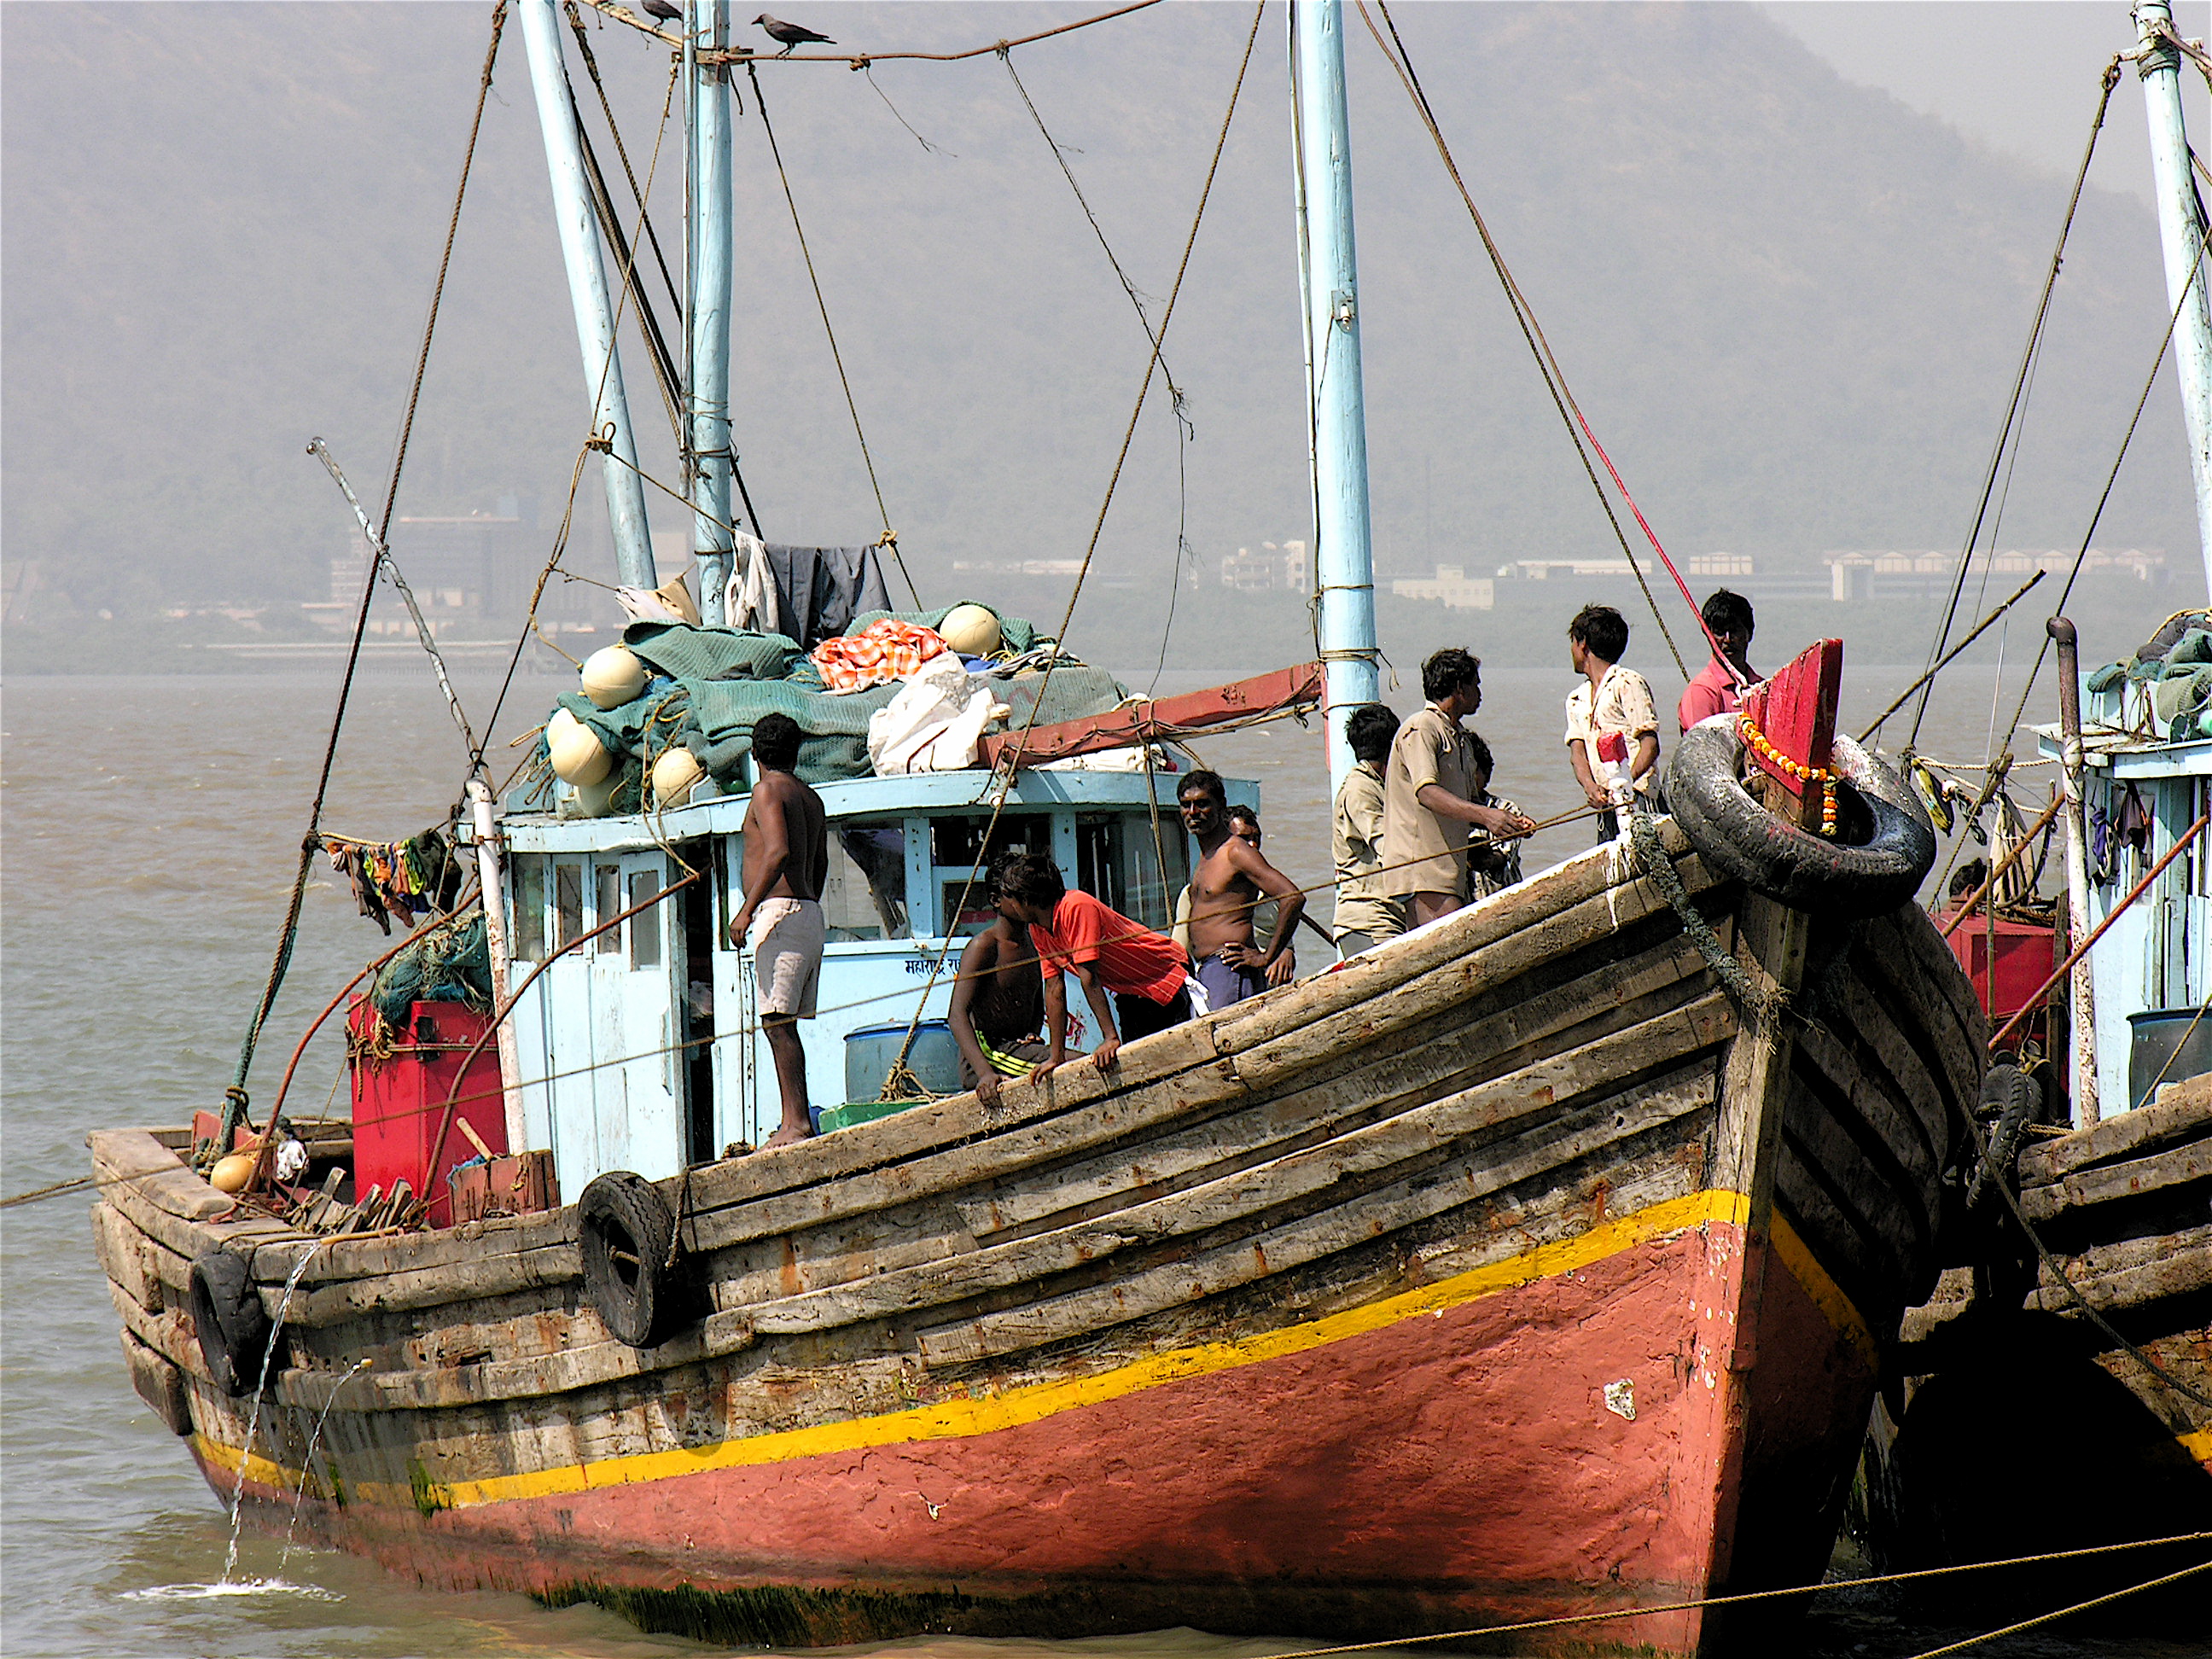 File:Indian fishing boat.jpg - Wikimedia Commons